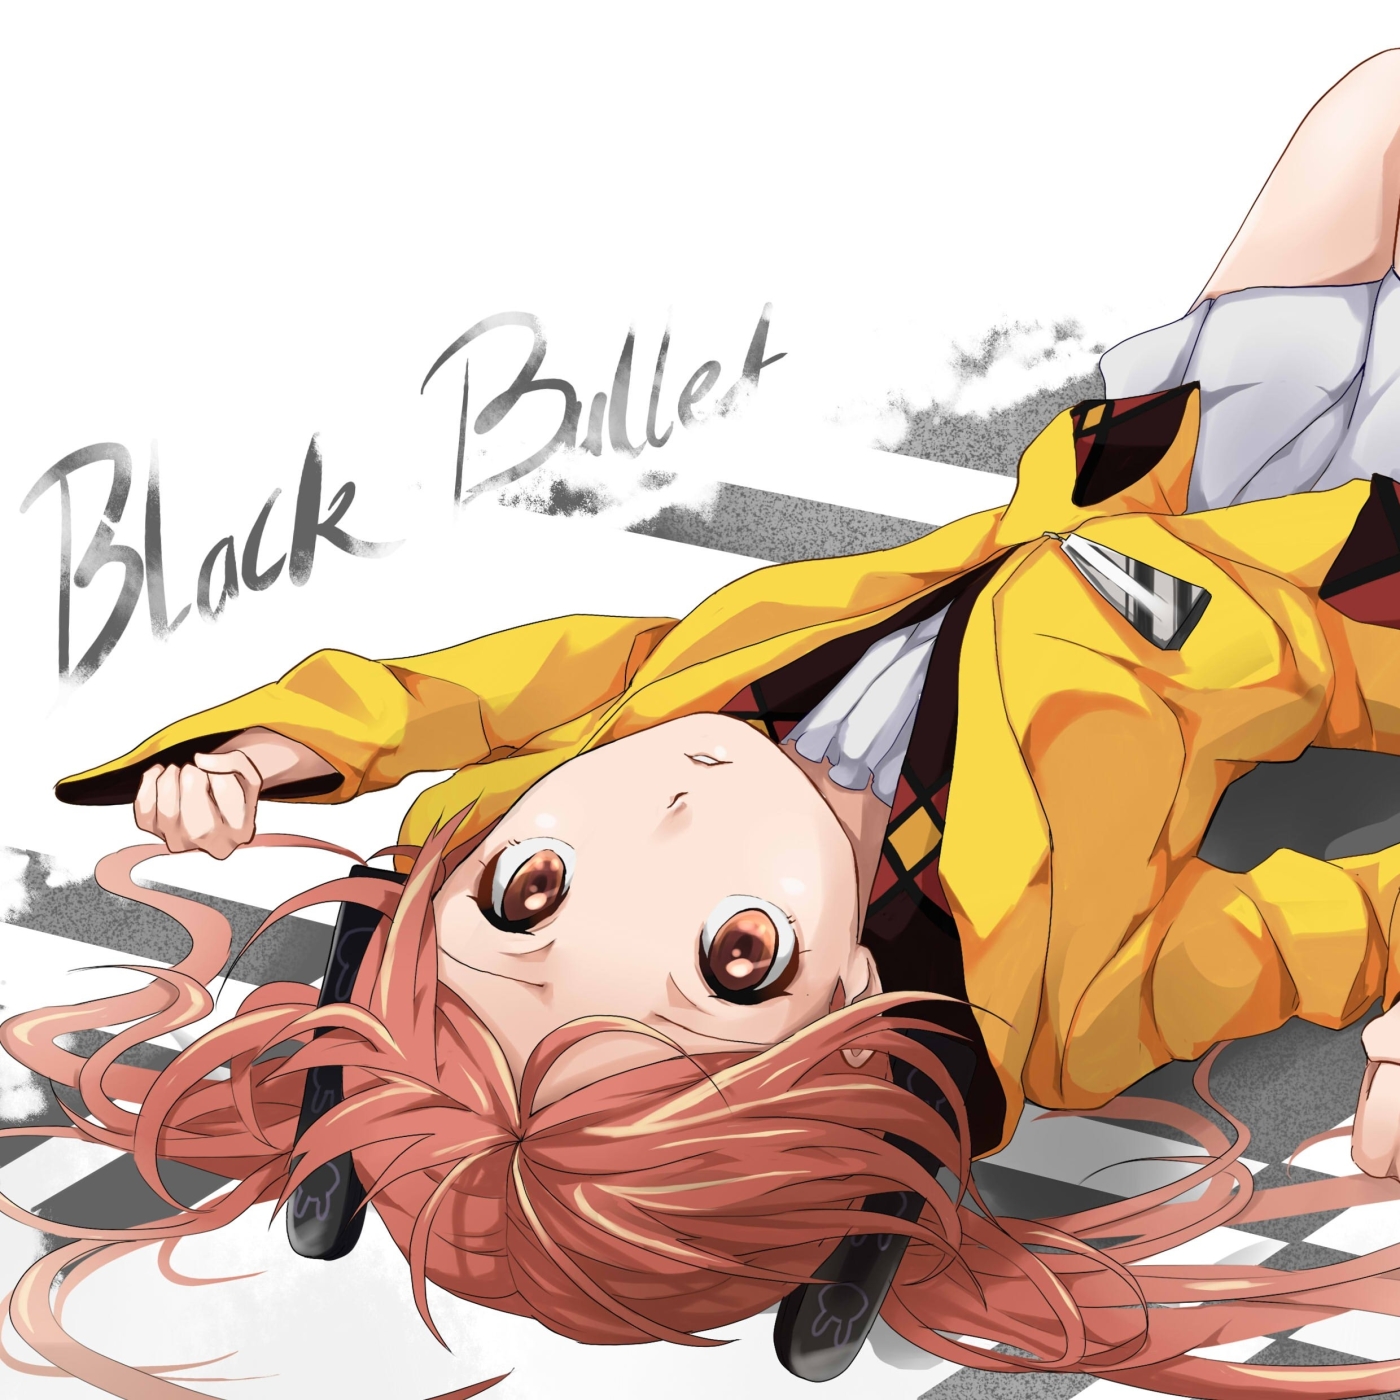 Black Bullet Pfp by Tsuchiya Nao